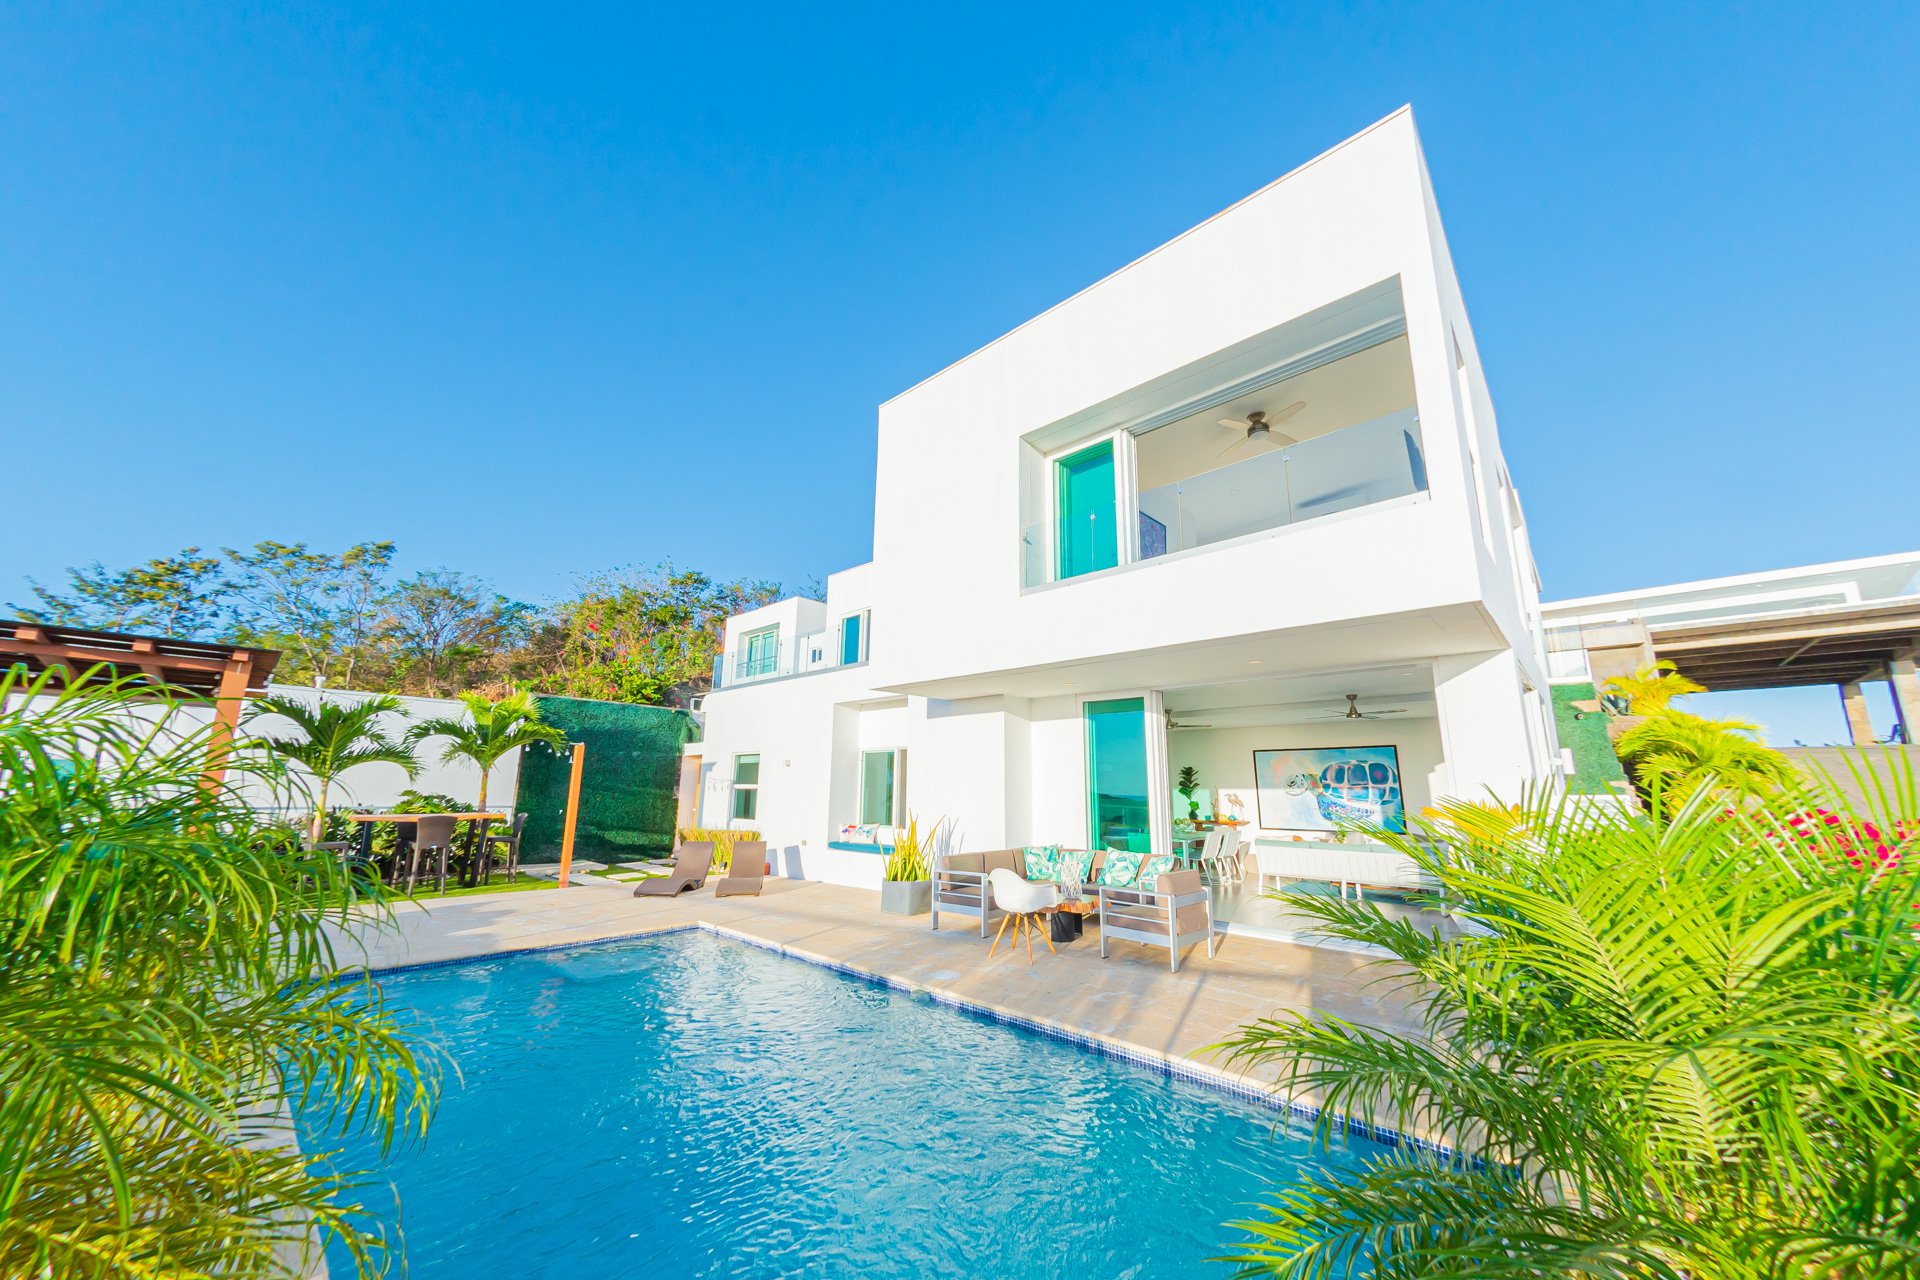 Five Bedroom Luxury Home For Sale San Juan Del Sur Nicaragua 15.JPG